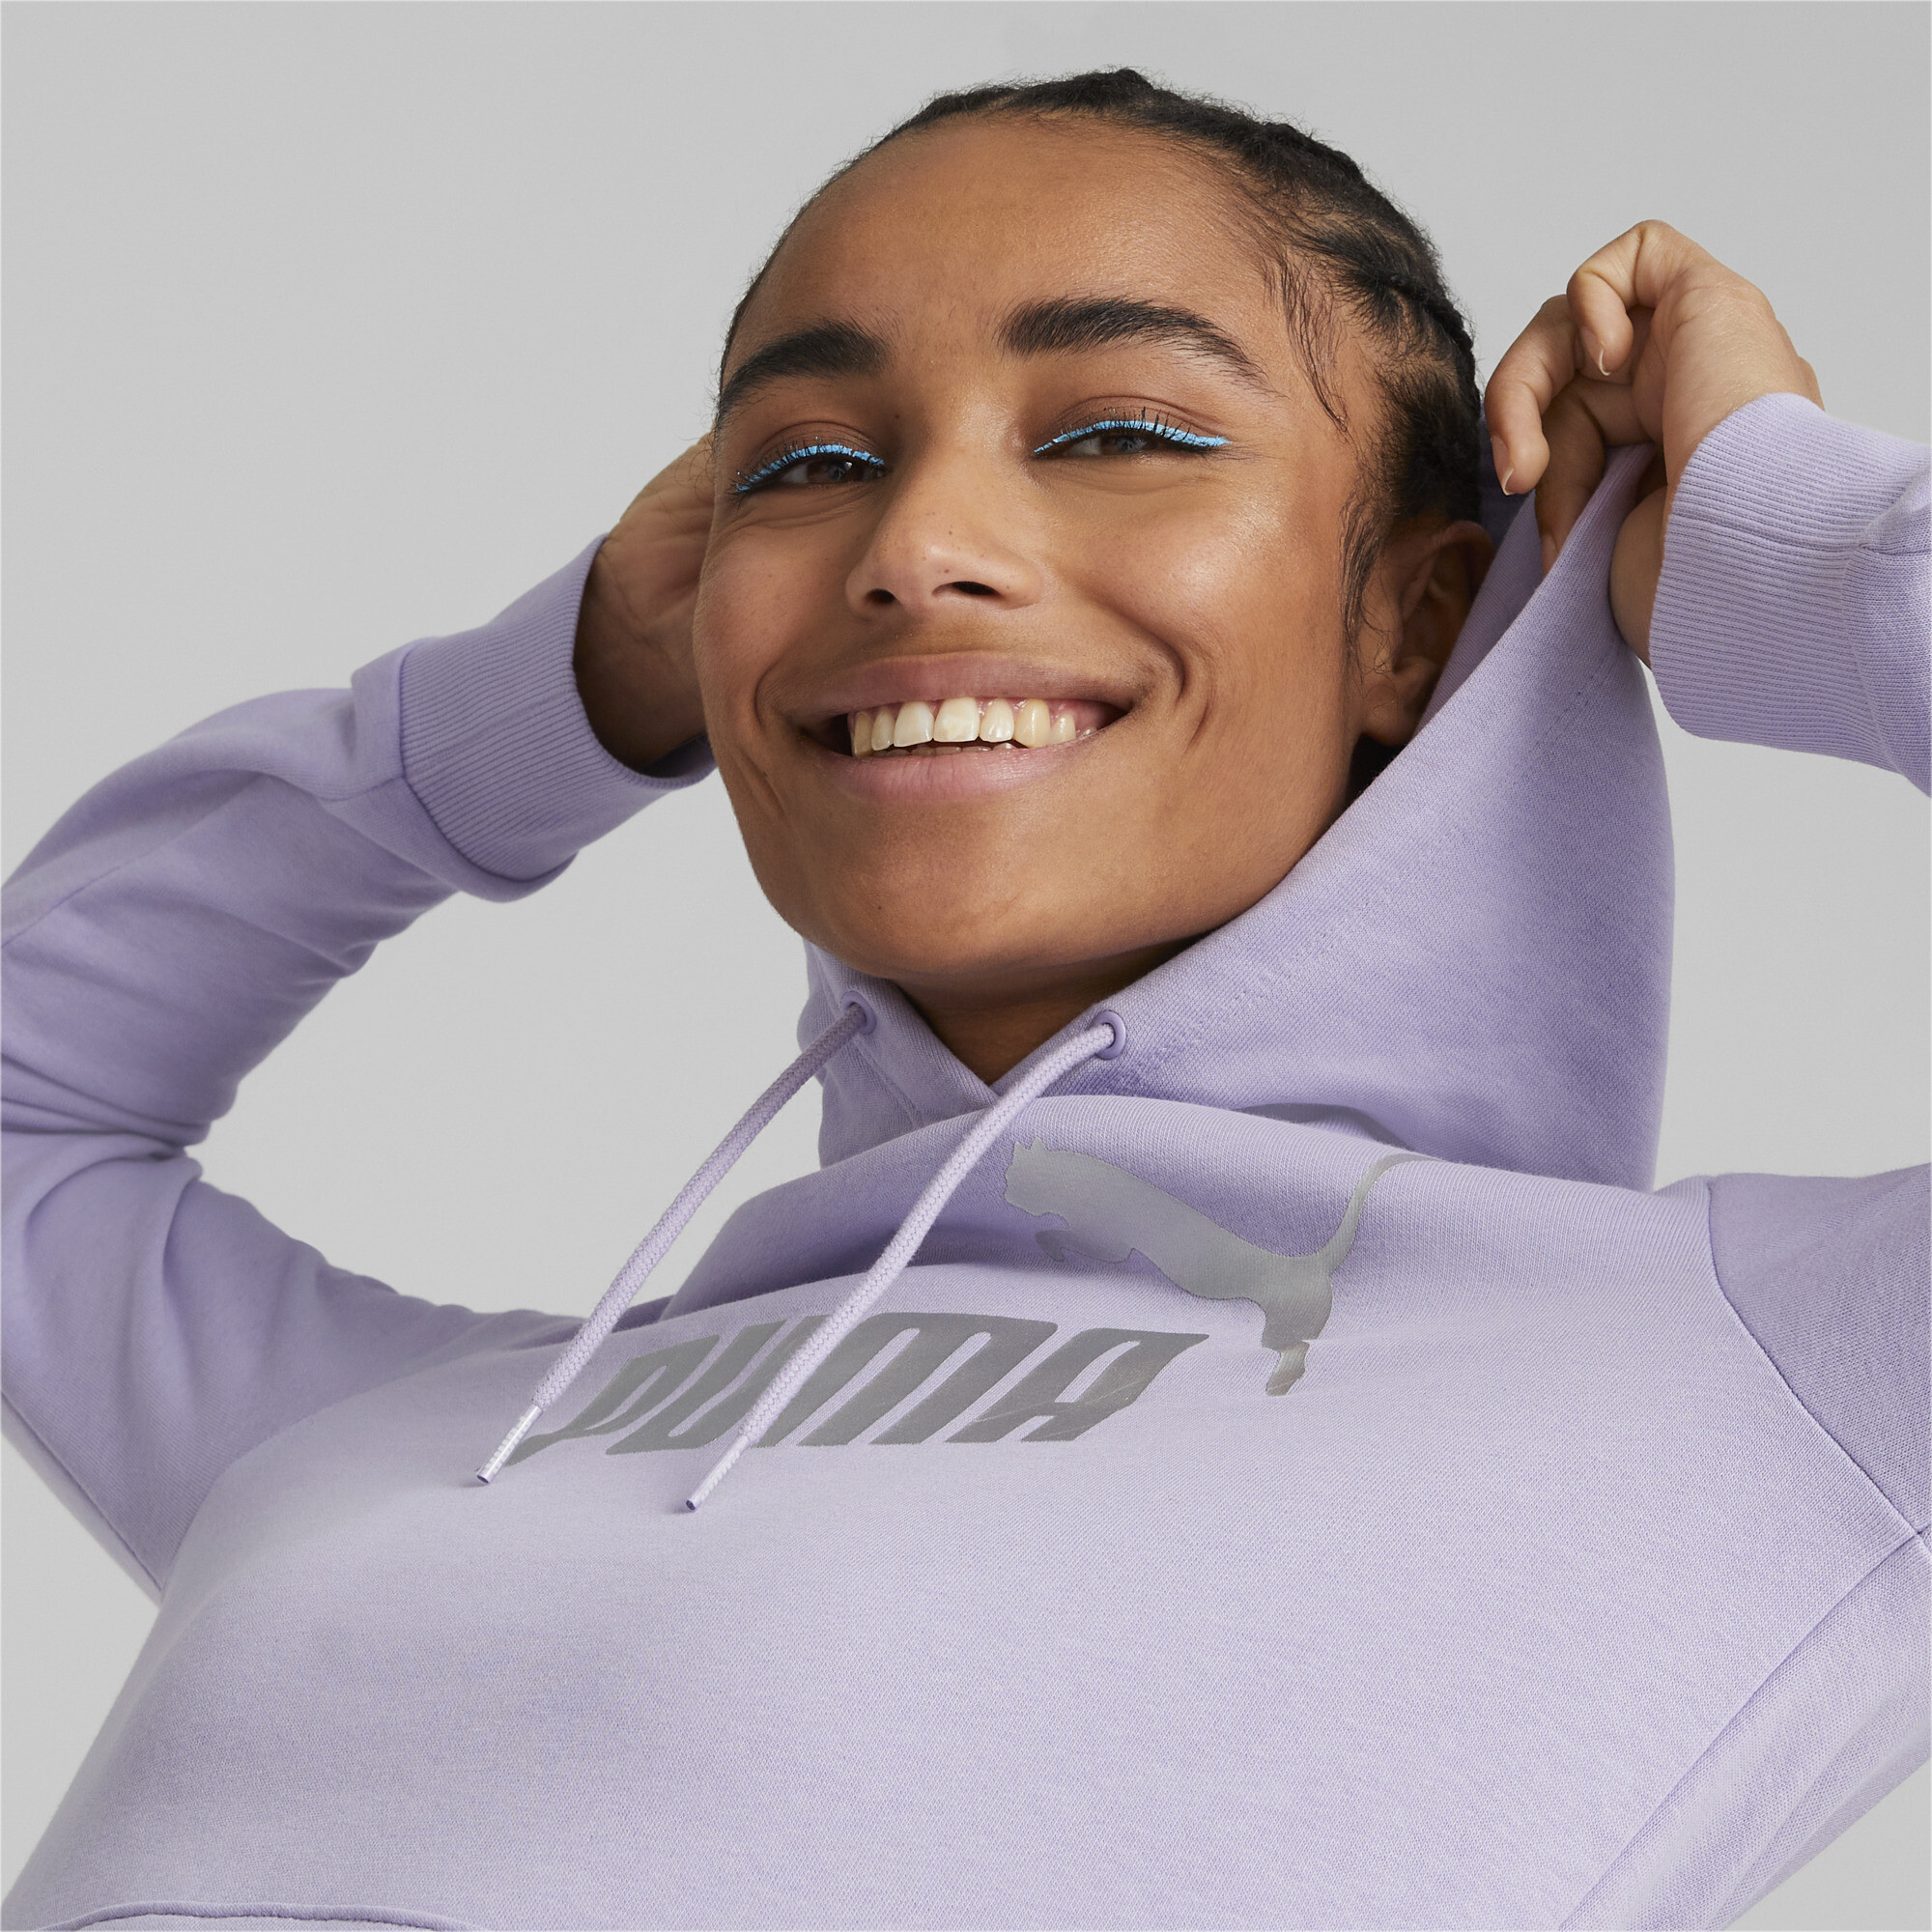 Women's Puma Essentials+ Metallic Logo's Hoodie, Purple, Size XL, Clothing